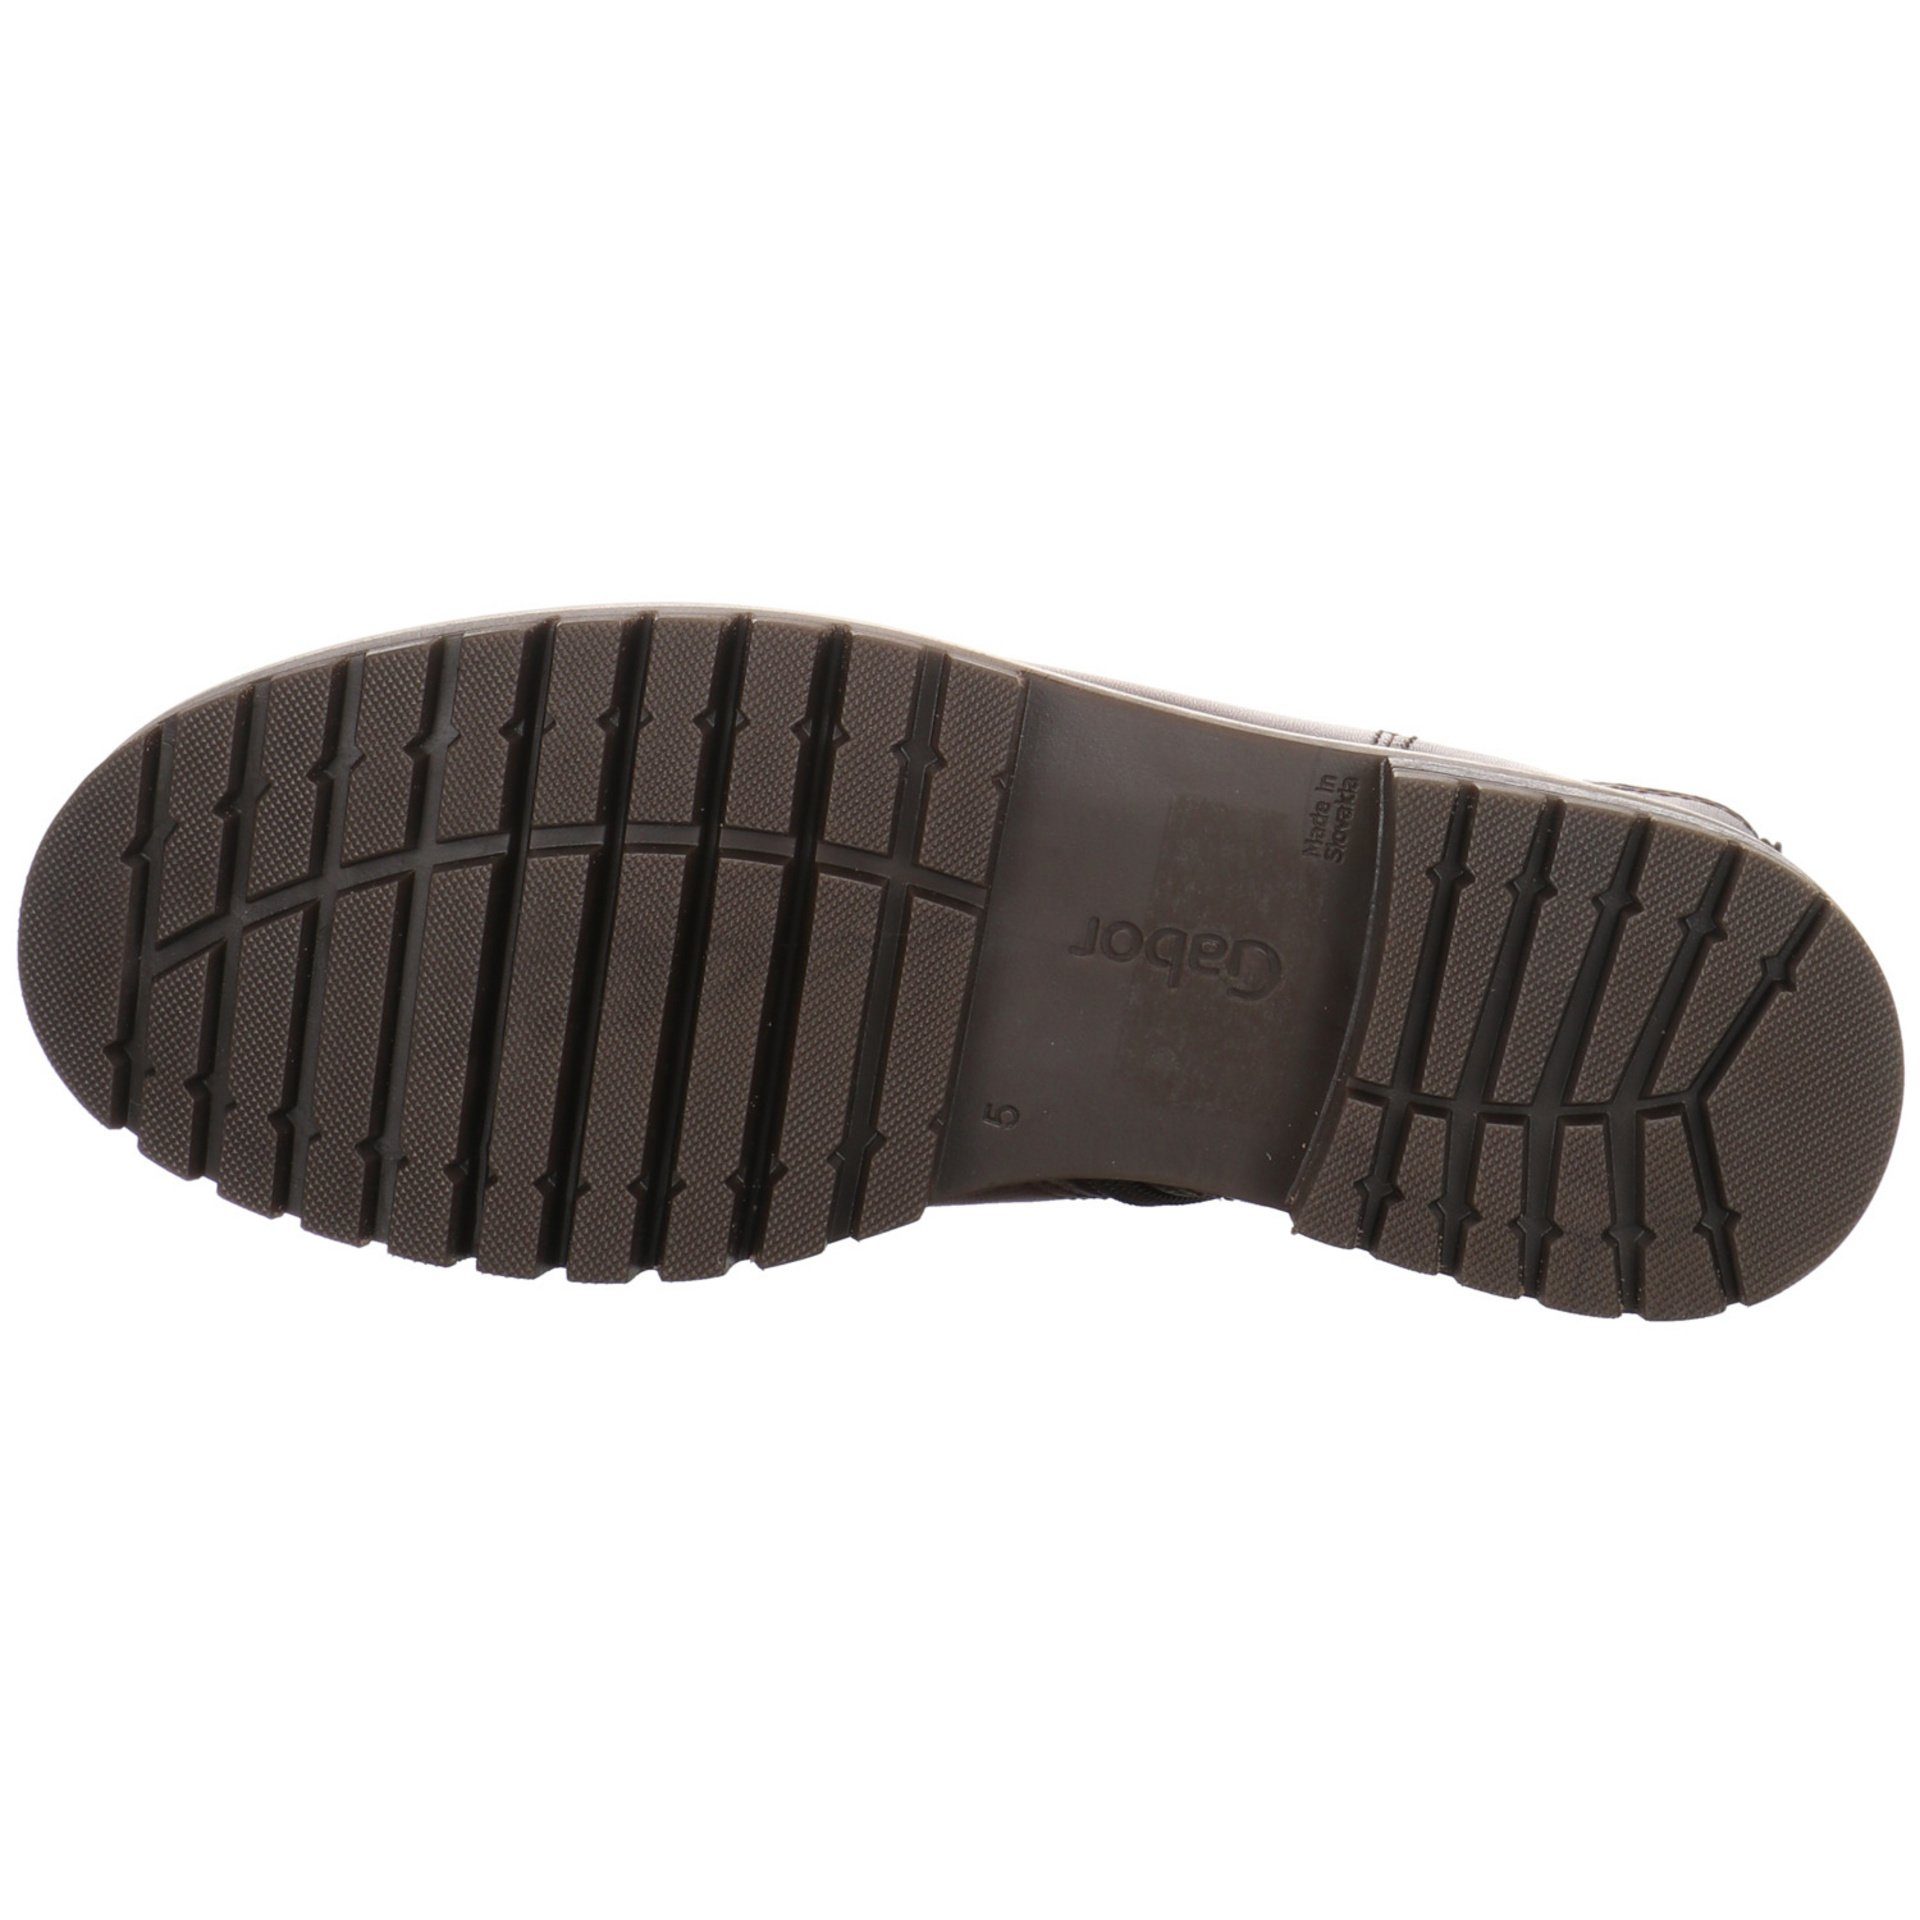 Gabor Damen Stiefel Schuhe Chelsea Leder-/Textilkombination (river) Boots Stiefel sattel